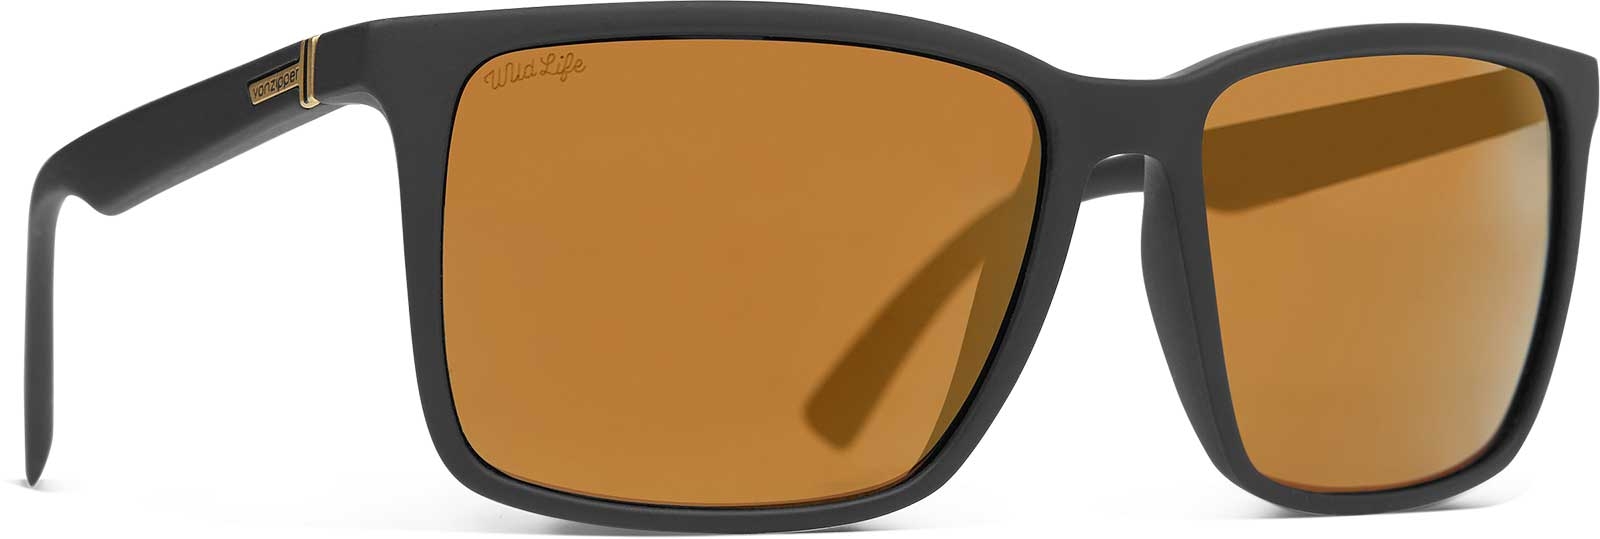 Polarized PRO Replacement Lenses for Von Zipper Snark Sunglasses By APEX Lenses Brown